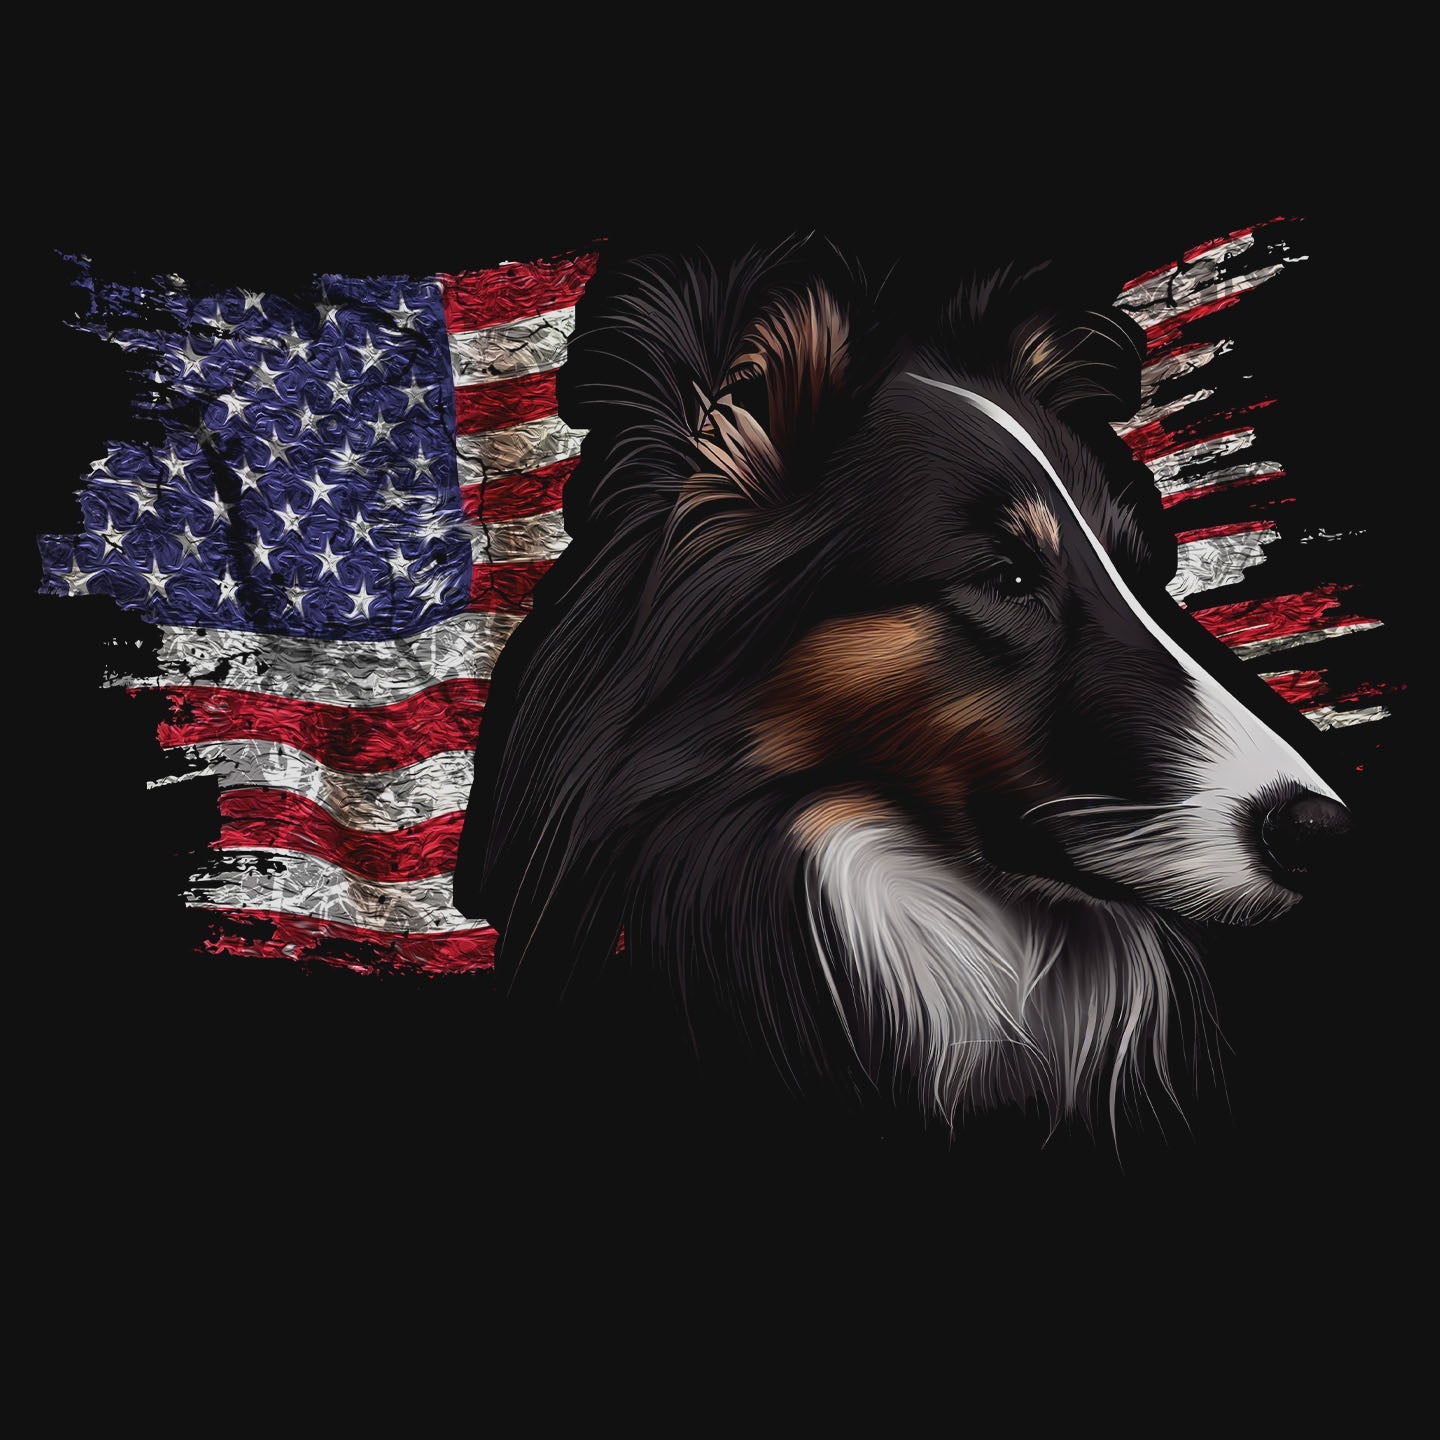 Patriotic Collie American Flag - Adult Unisex T-Shirt